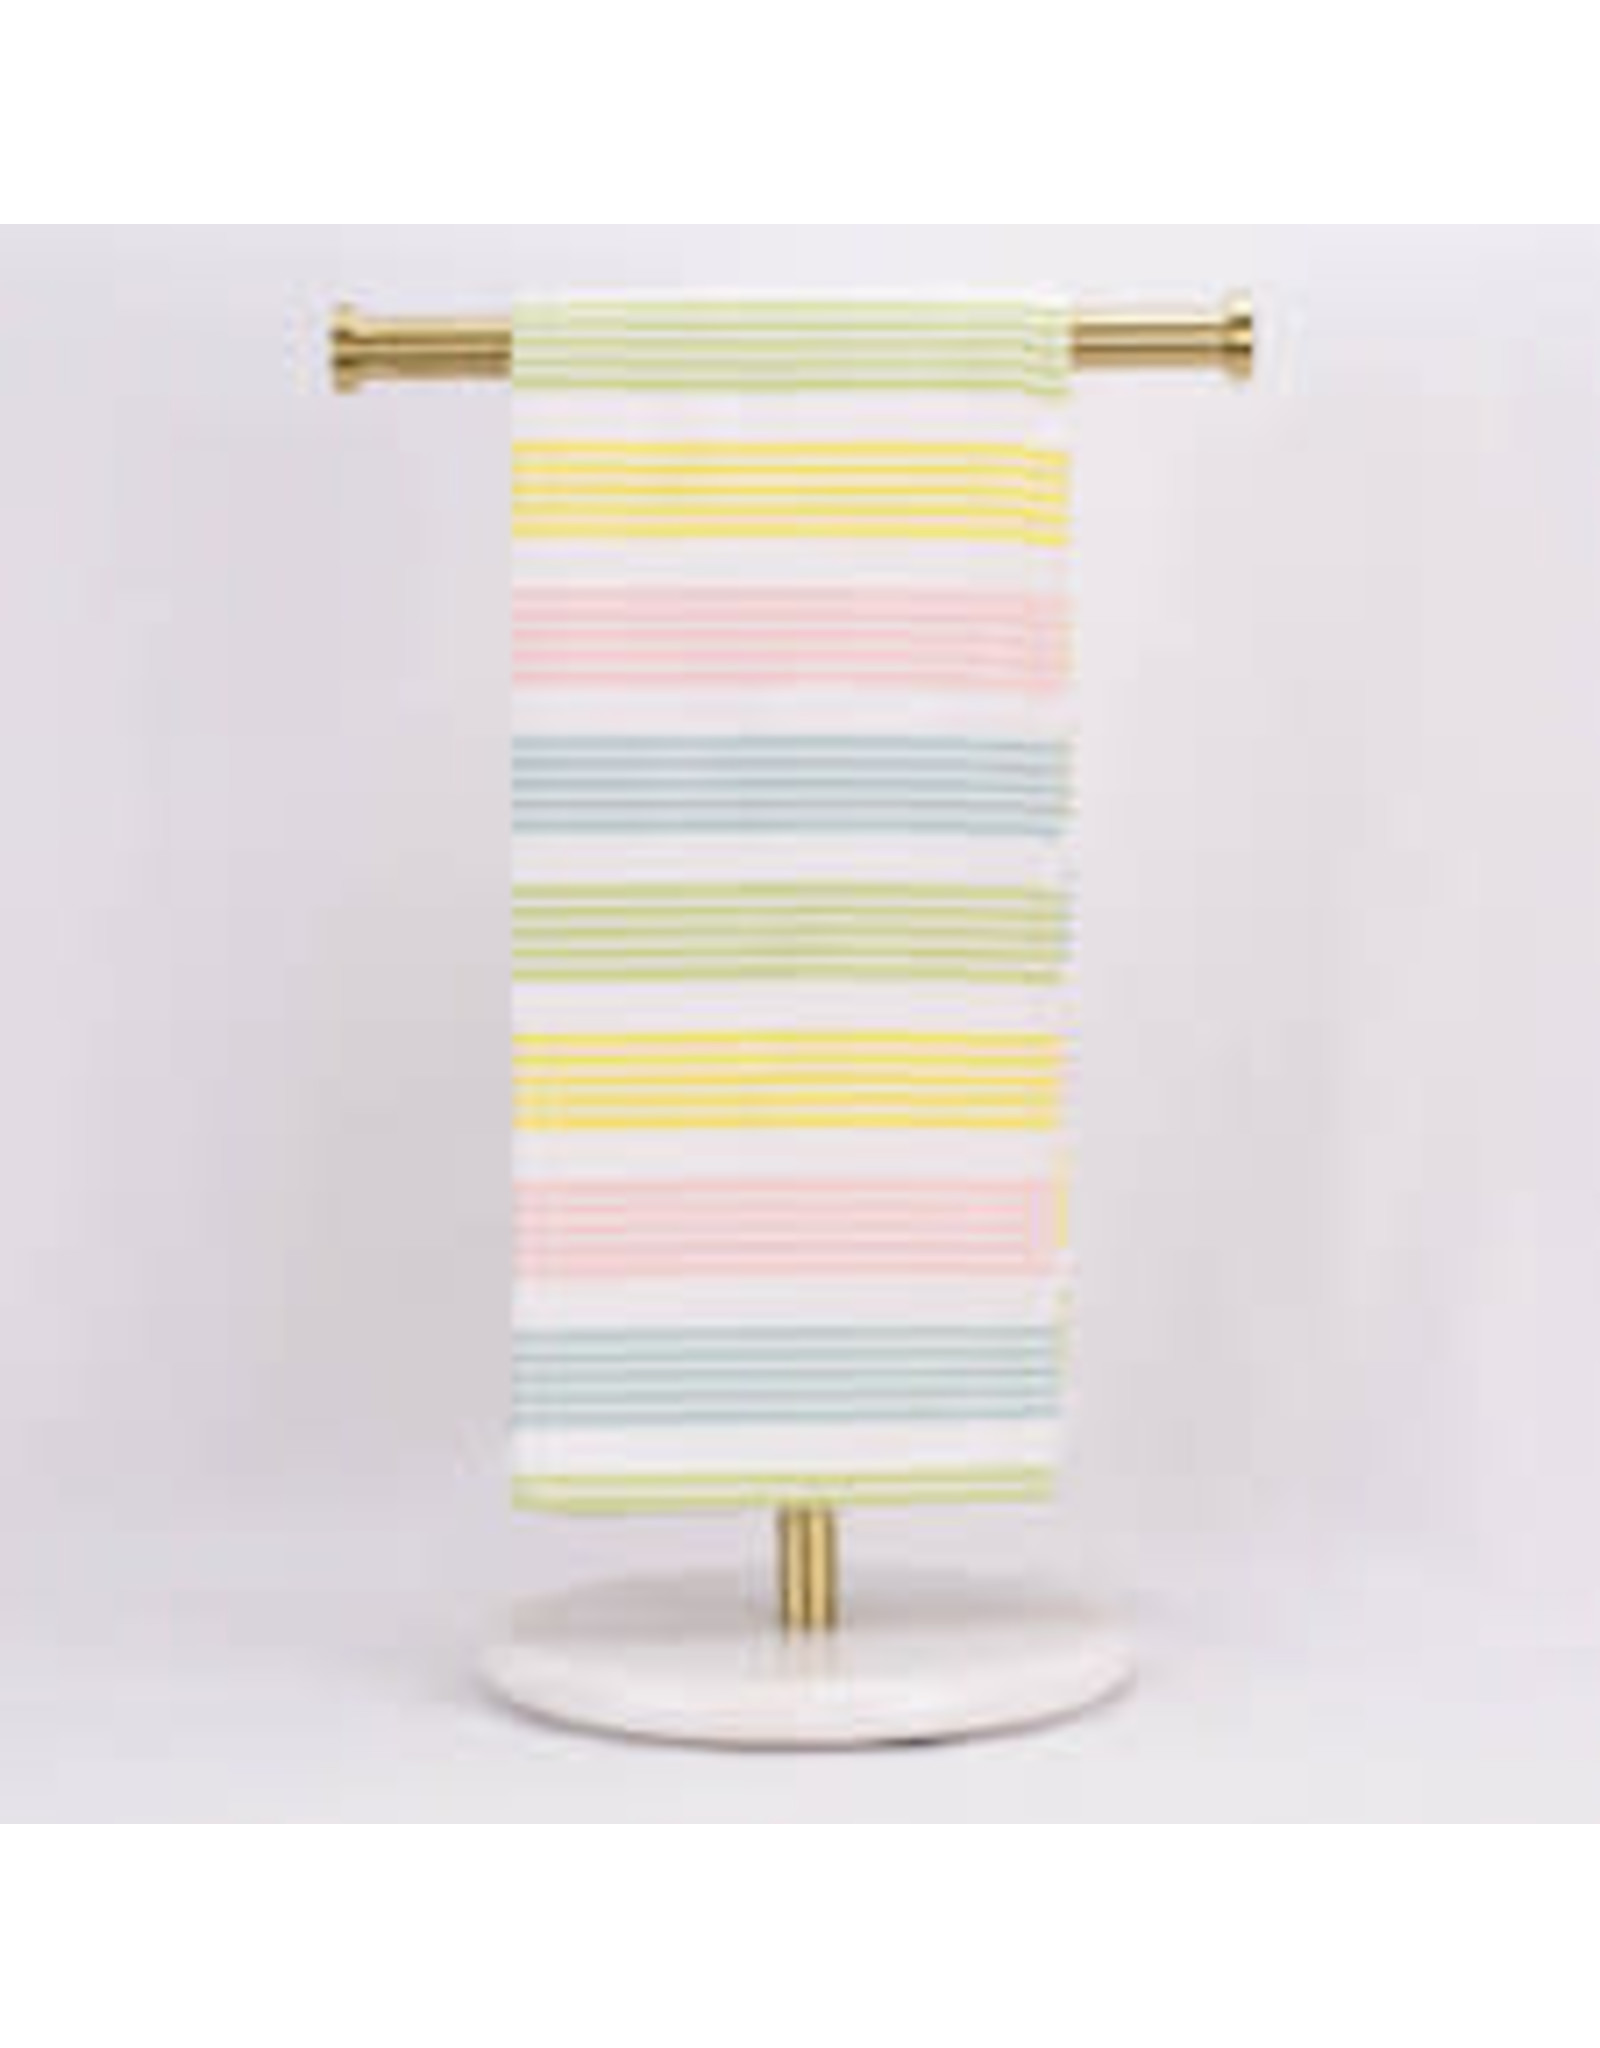 The Royal Standard Springtime Stripe Hand Towel 20 x 28